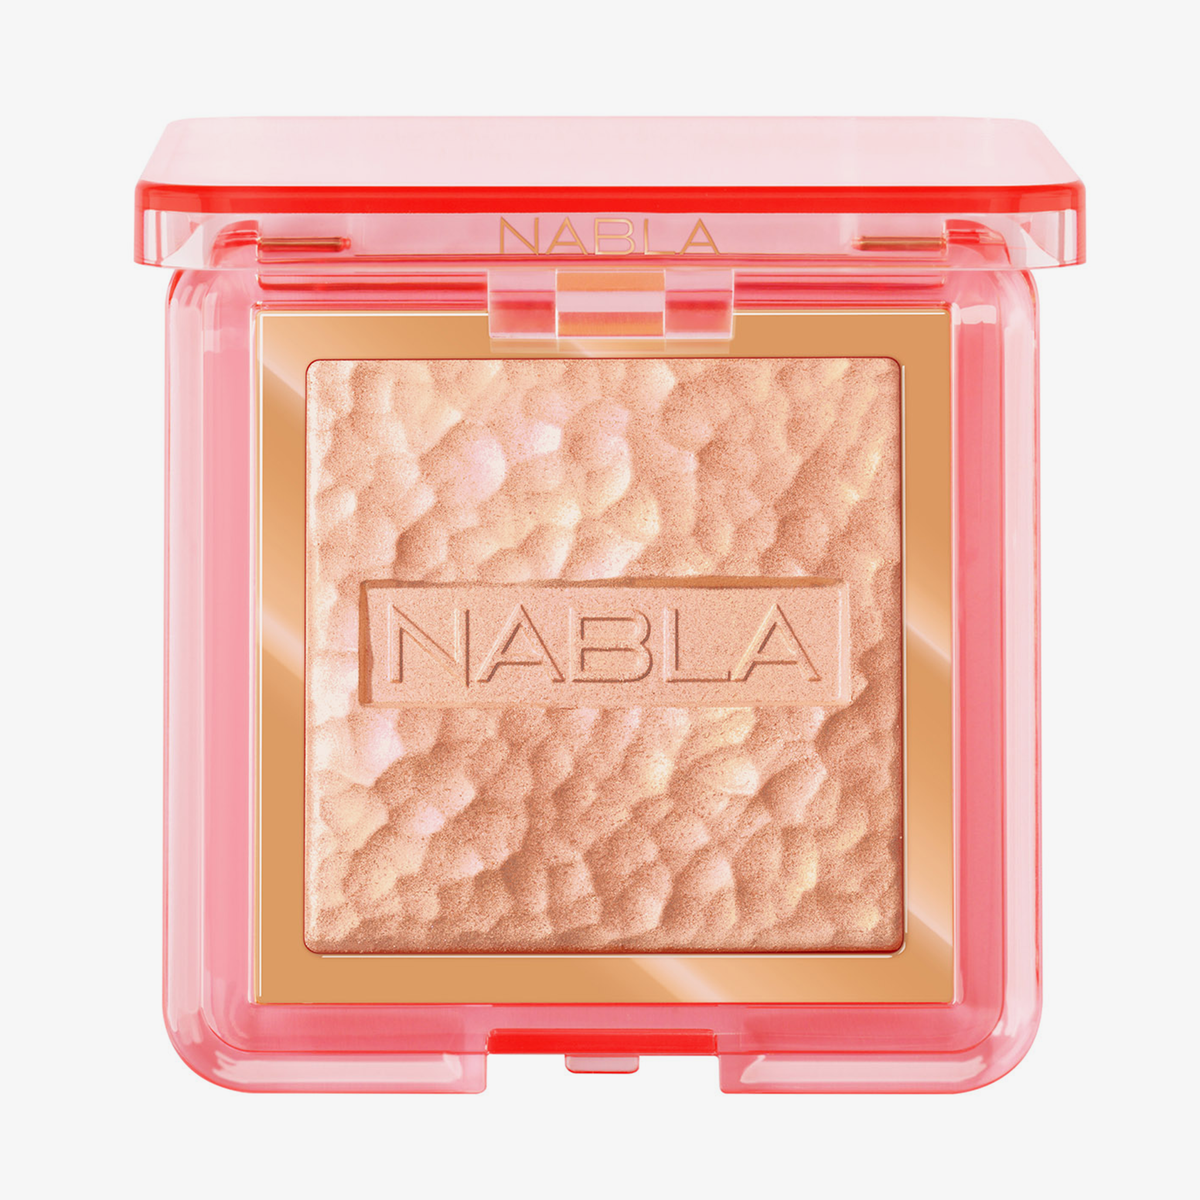 Nabla Cosmetics - Privelige Skin Glazing Highlighter & Luminizer